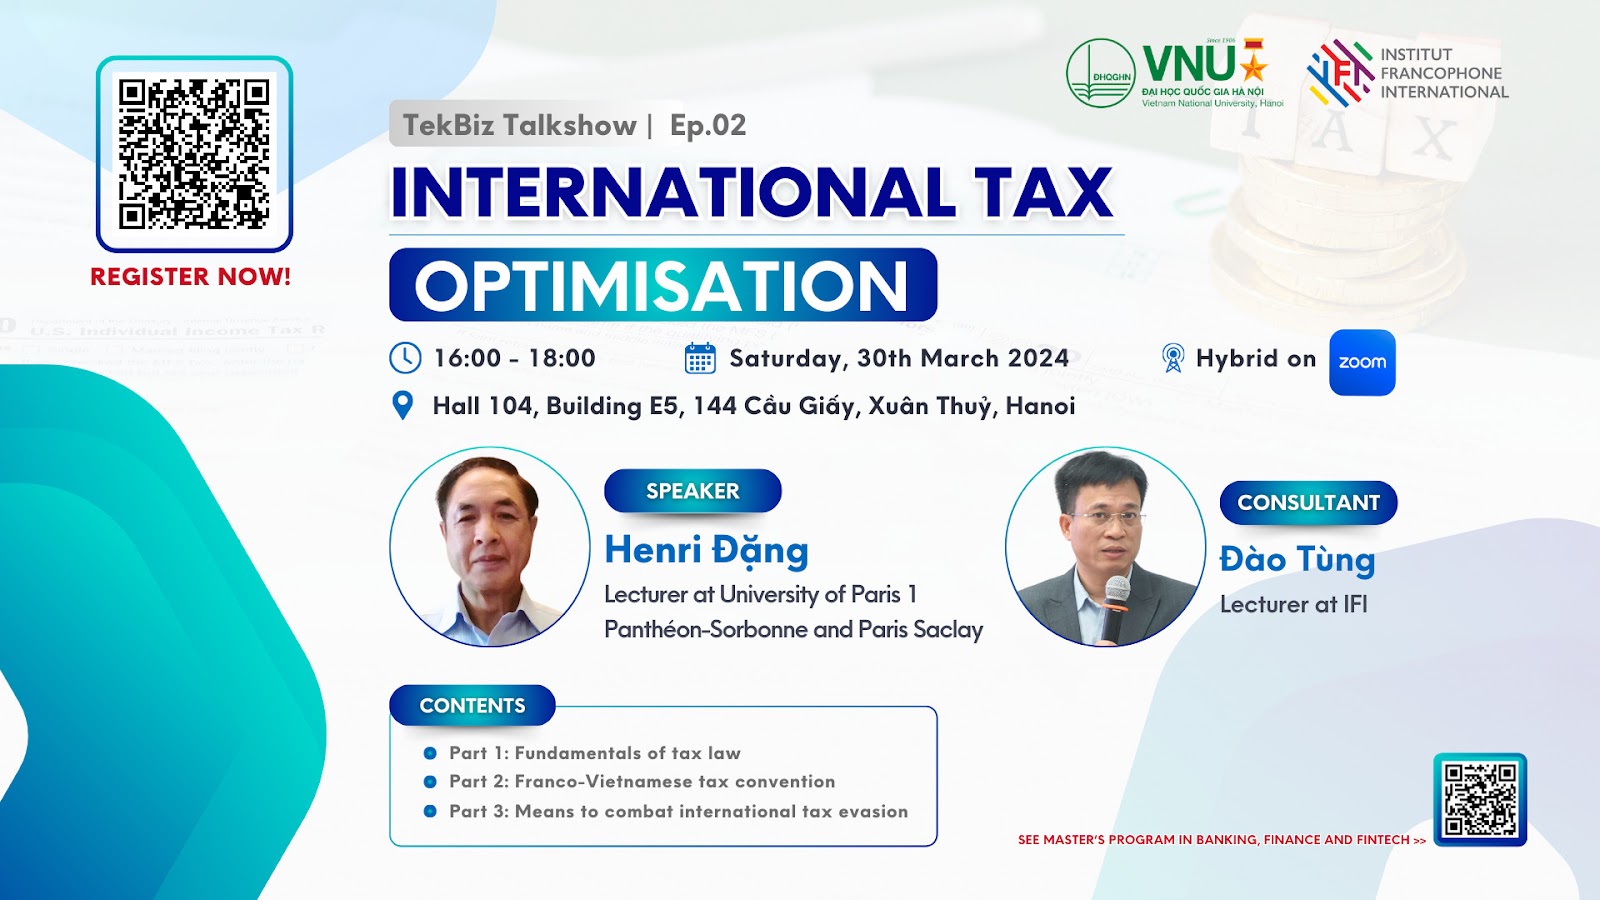 Talkshow “International Tax Optimisation - Chiến lược tối ưu hóa thuế quốc tế”